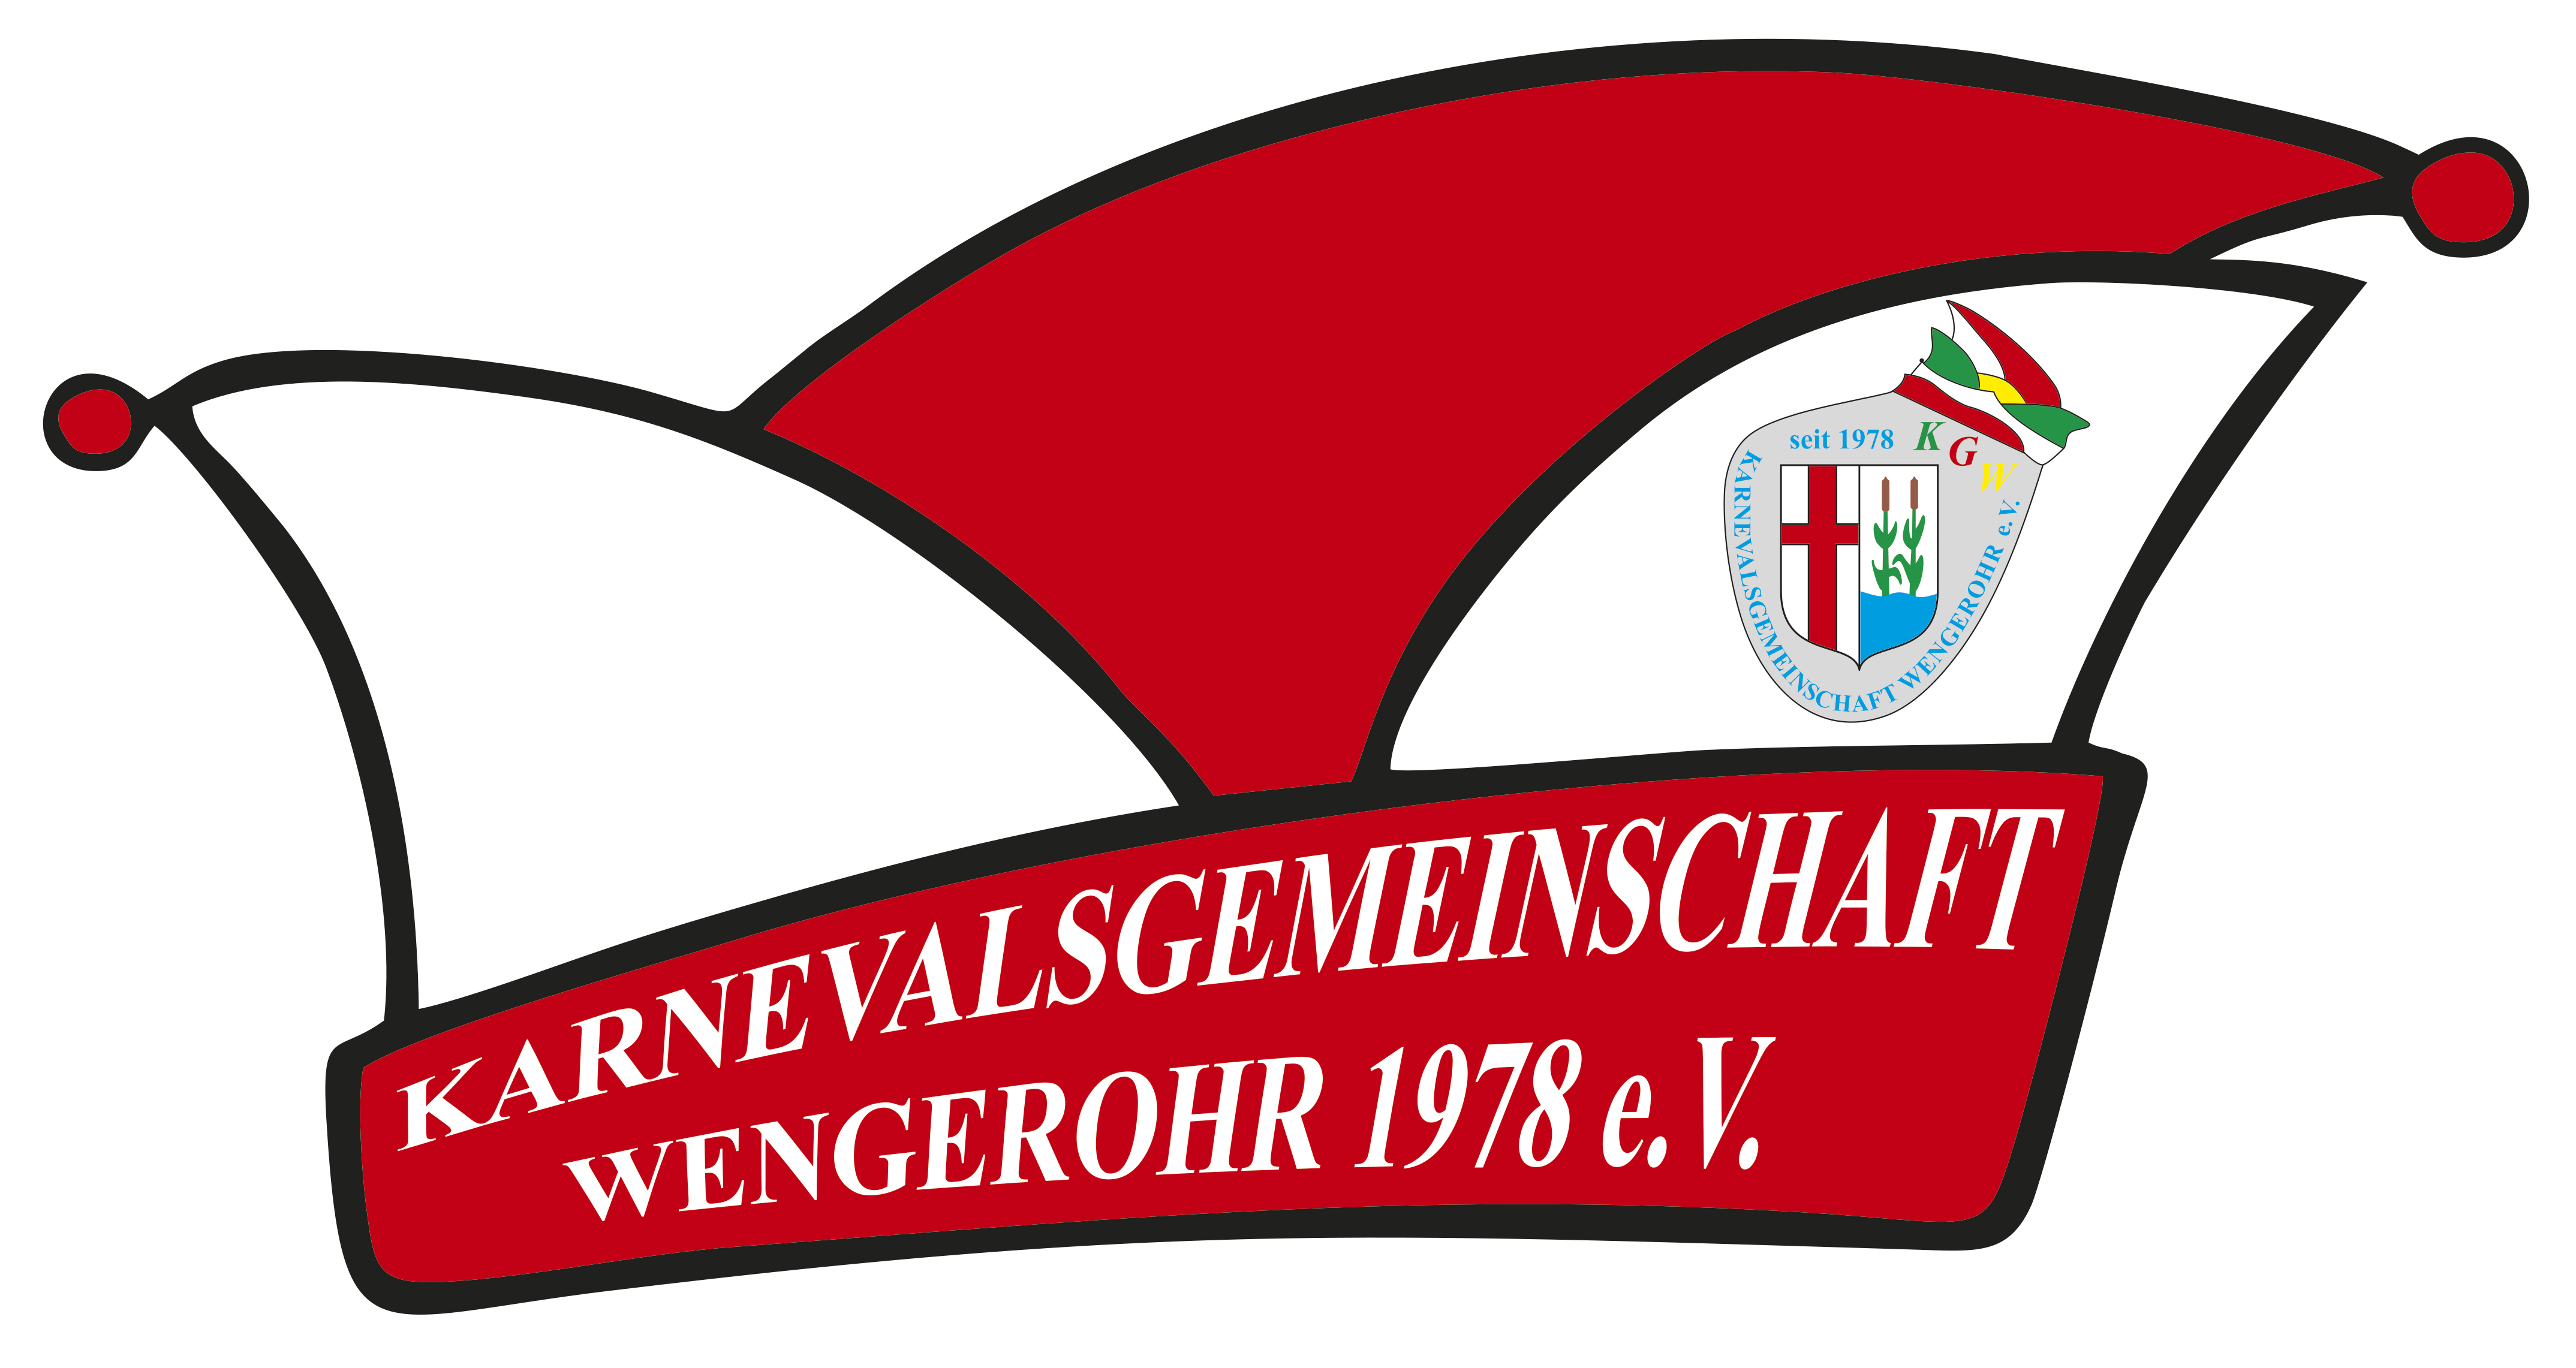 Karnevalsgemeinschaft Wengerohr 1978 e. V.